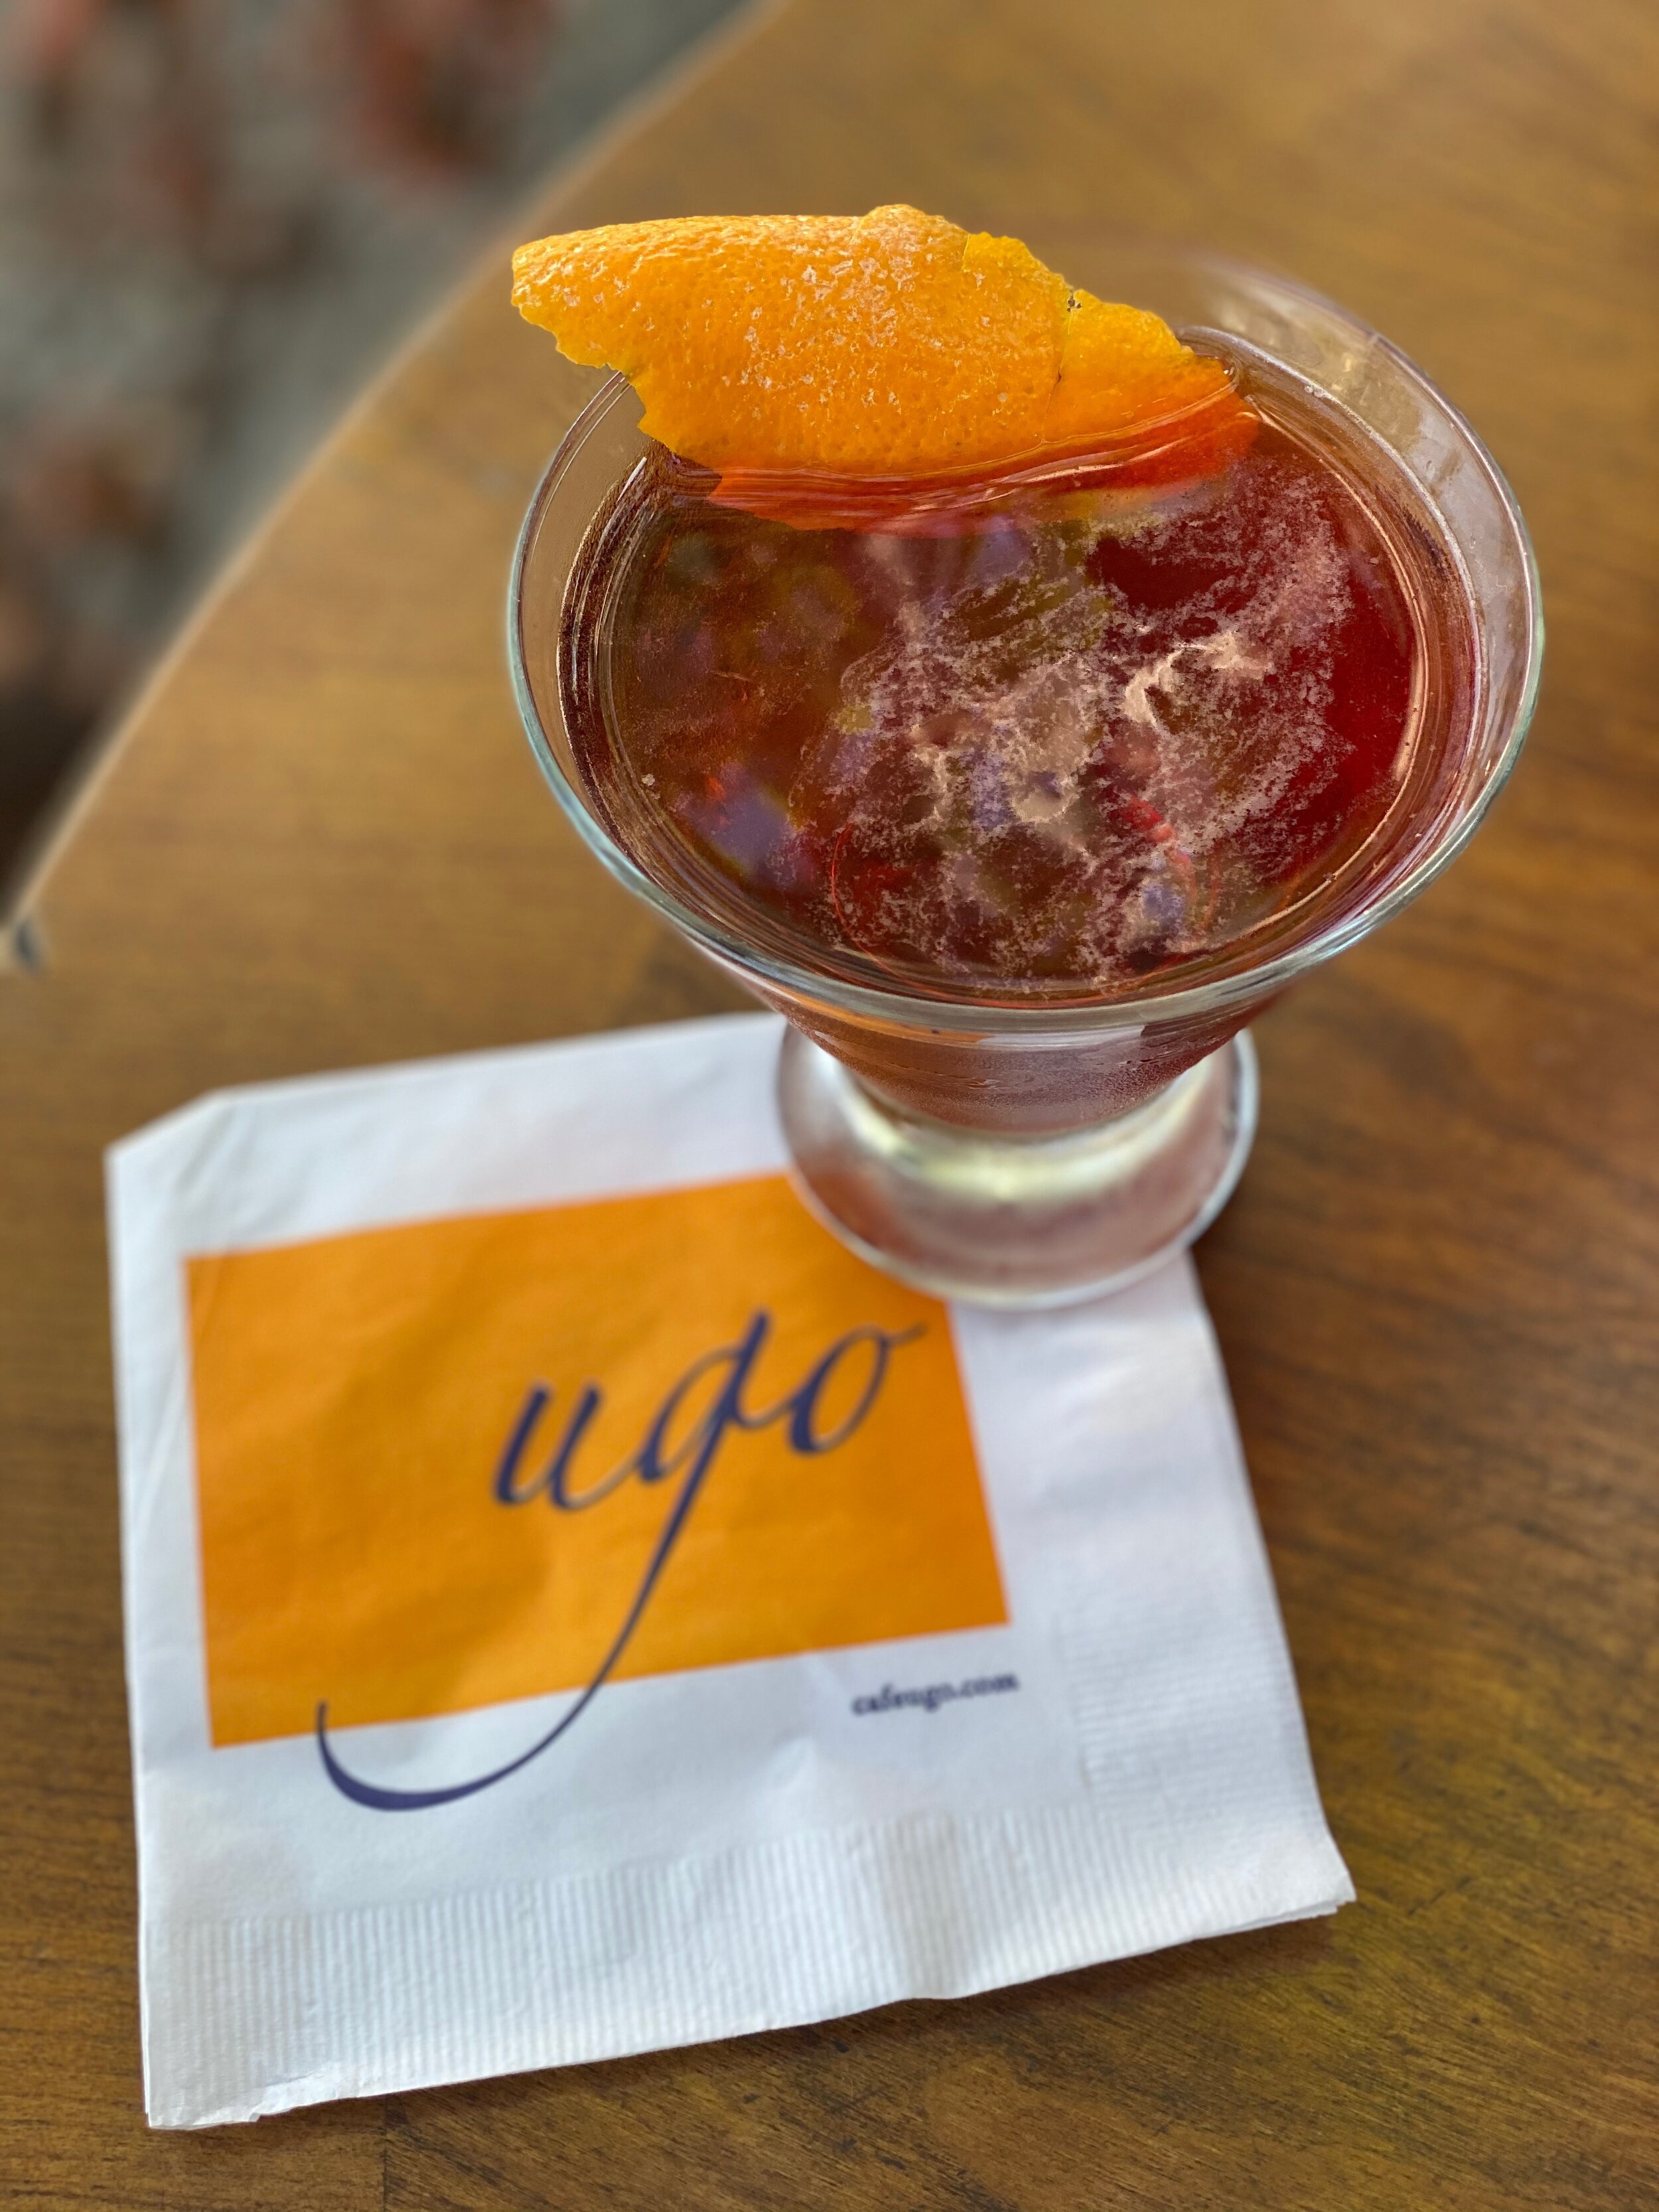 cocktail with orange rind sits on Ugo napkin